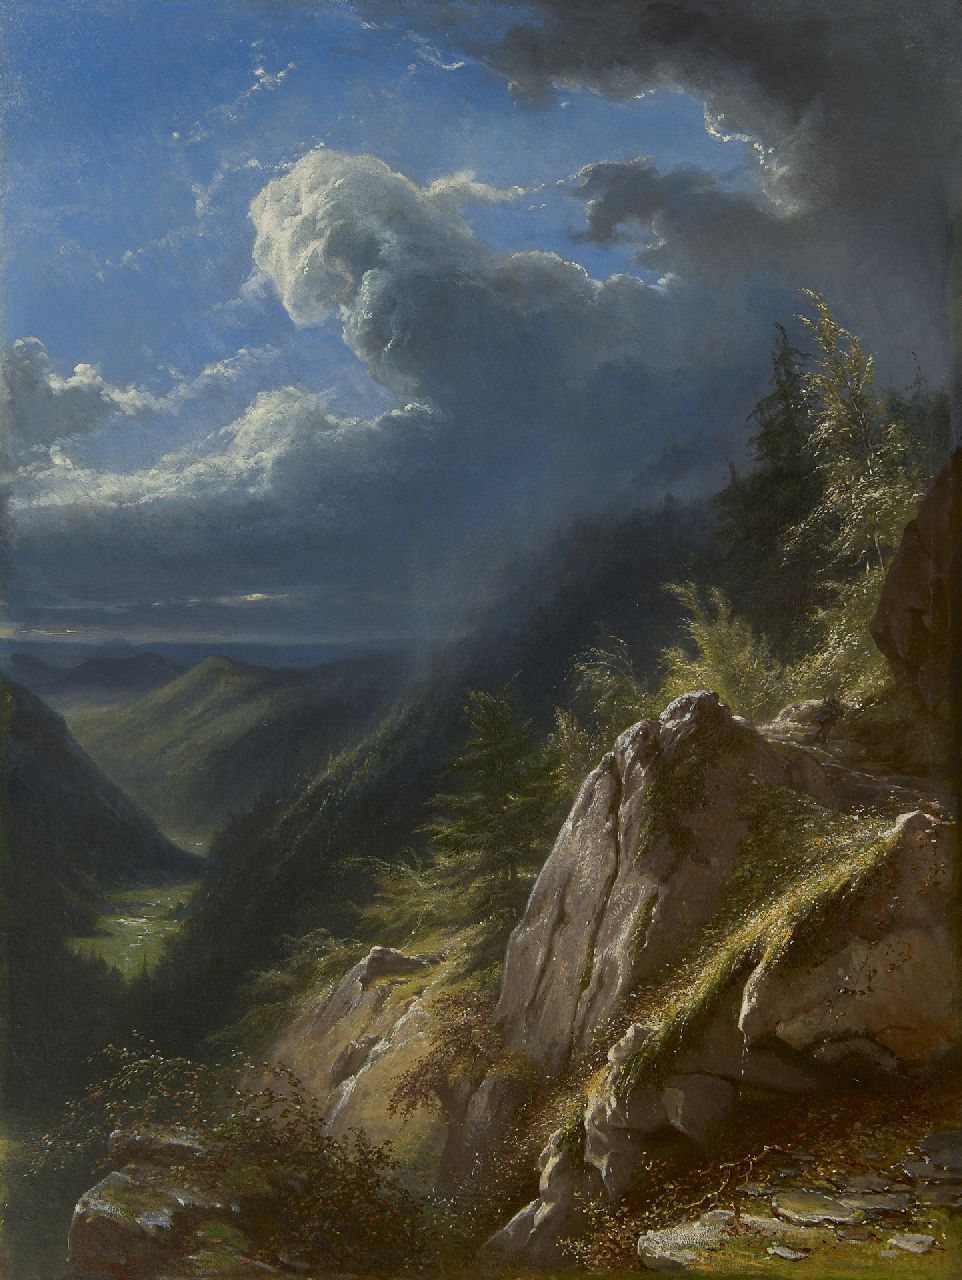 Lamme A.J.  | Ary Johannes Lamme, Naderende storm in berglandschap, olieverf op doek 85,5 x 64,7 cm, gesigneerd linksonder en gedateerd 1873